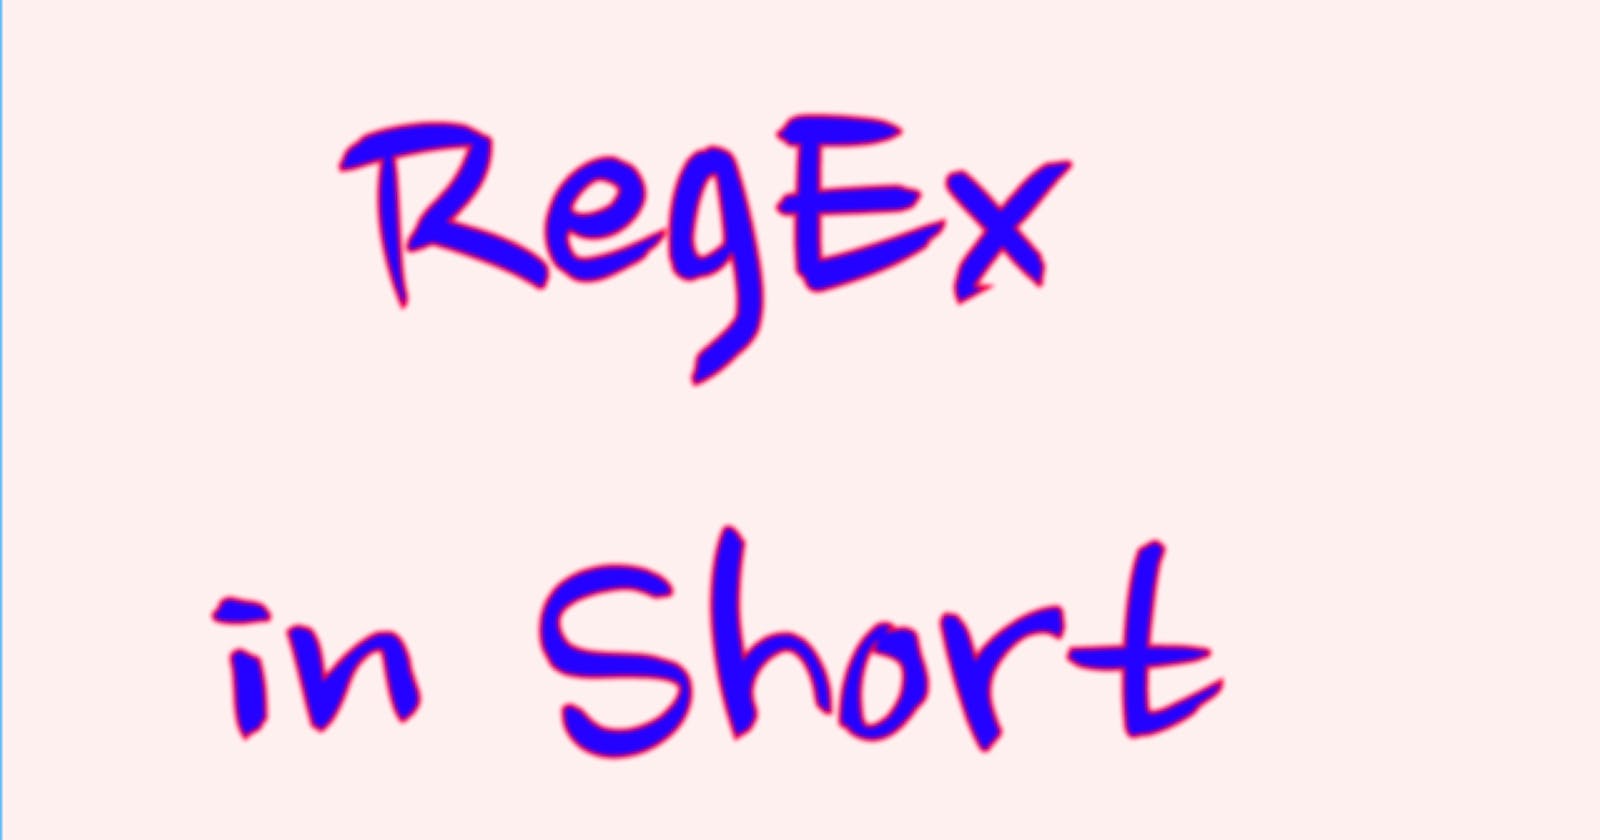 Regex in short